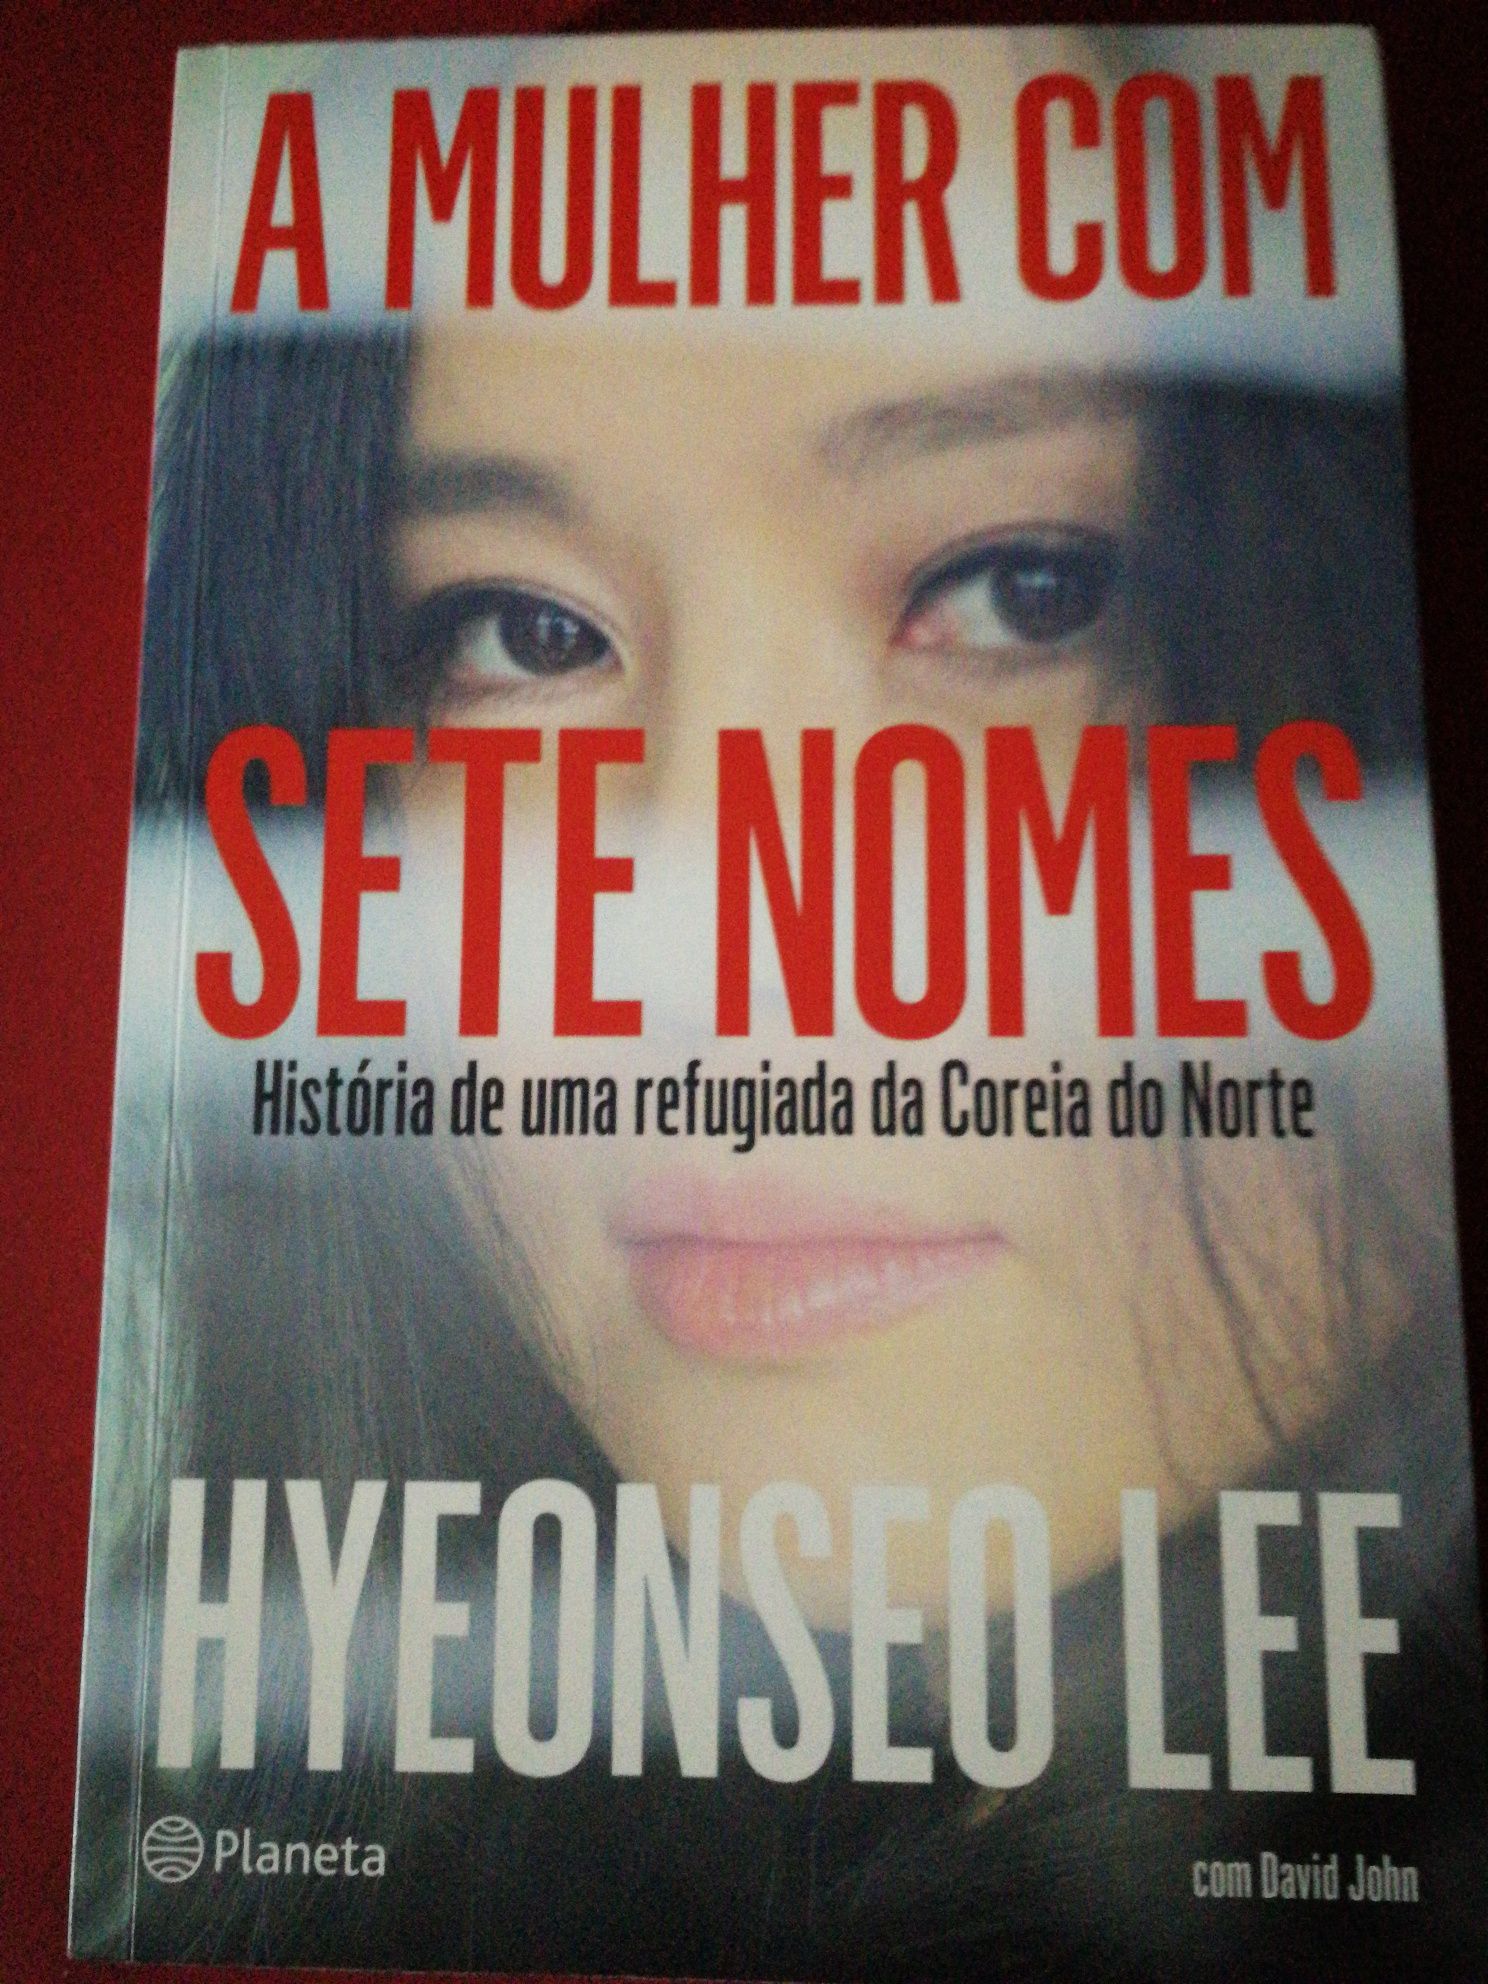 Livro "A Mulher com Sete Nomes" de Hyeonseo Lee